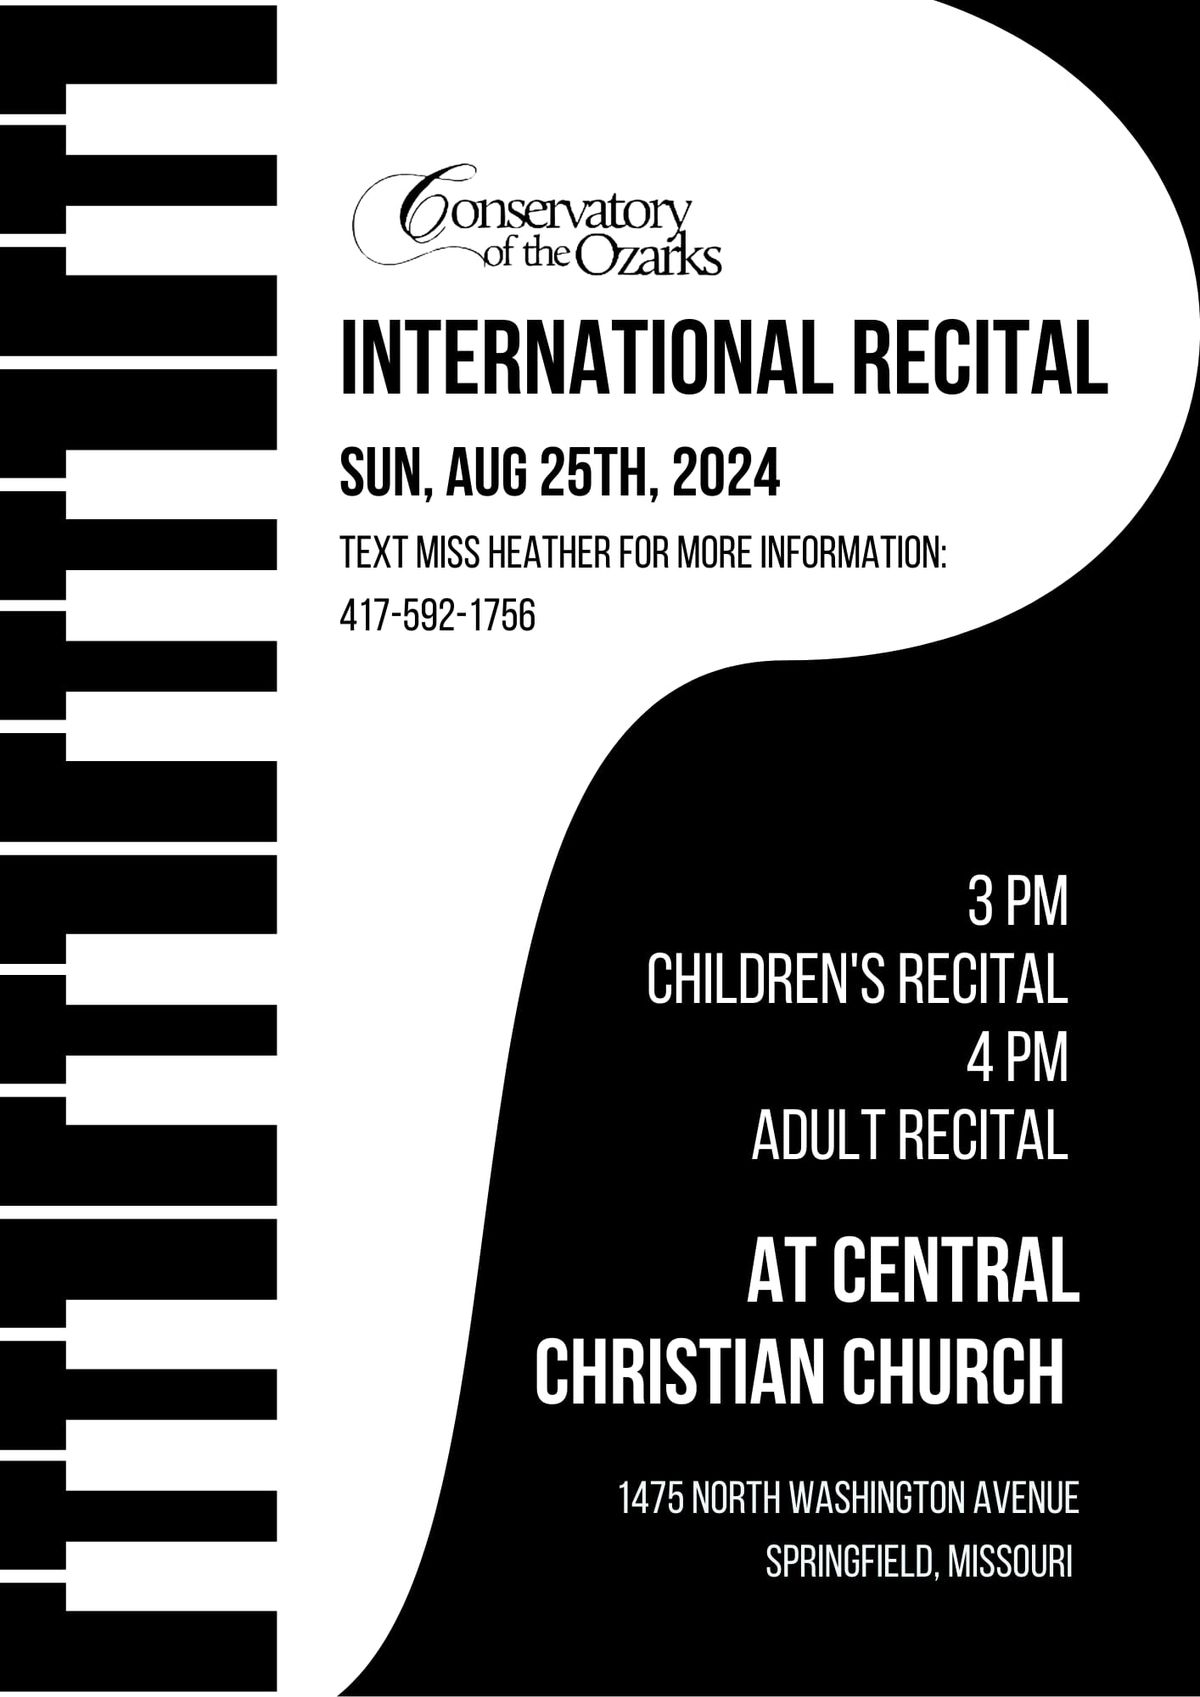 International Recital by Conservatory of the Ozarks 